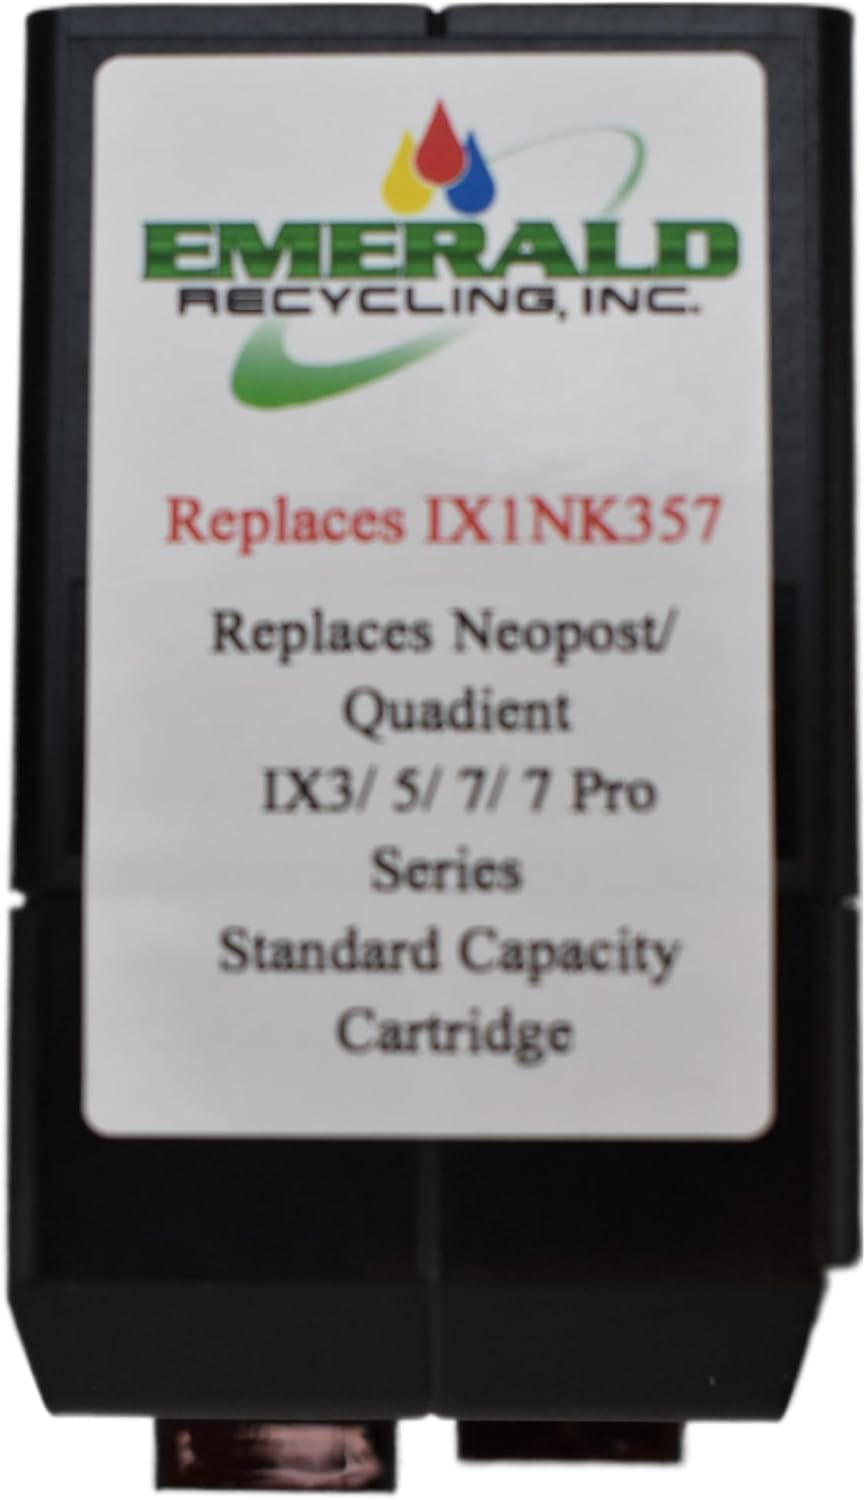 Compatible IXINK357 Quadient Ink Cartridge for the IX3, IX5, IX7 Postage Mailing